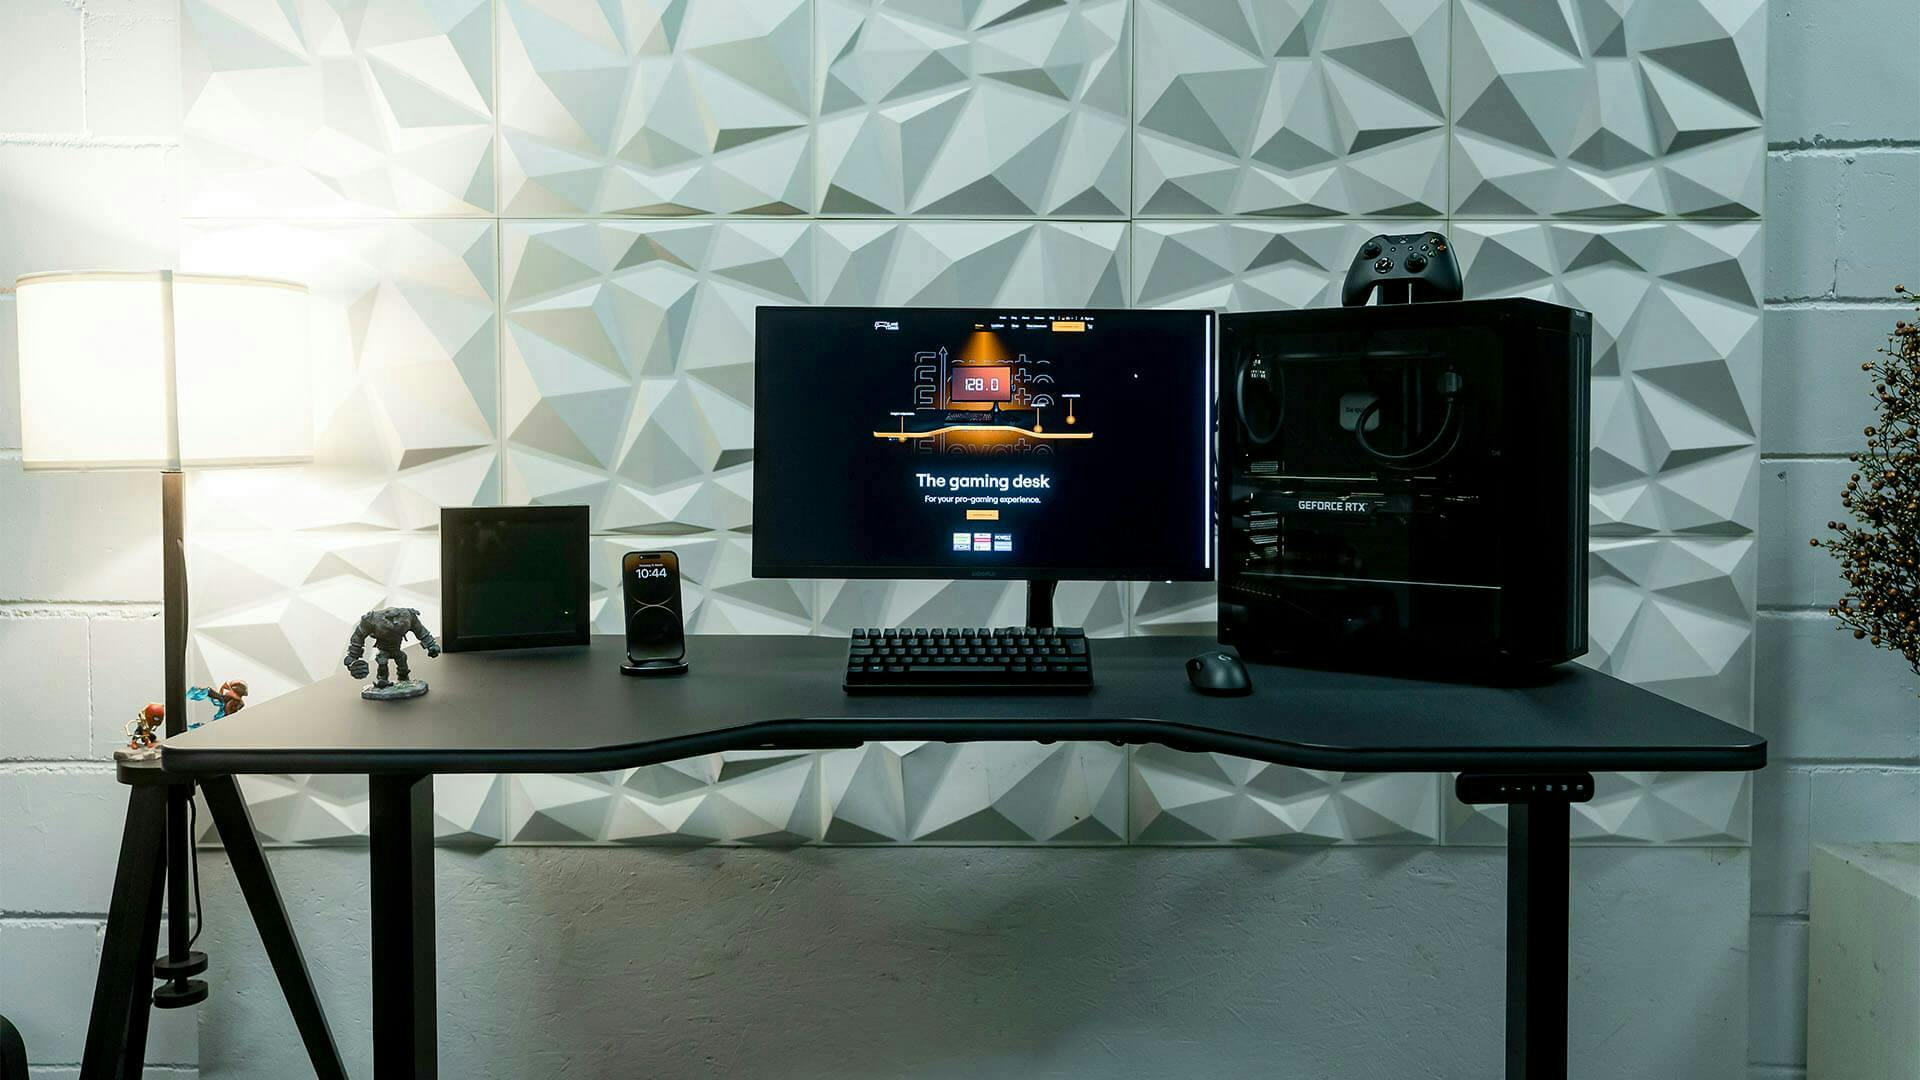 The LeetDesk gaming desk in natural light.